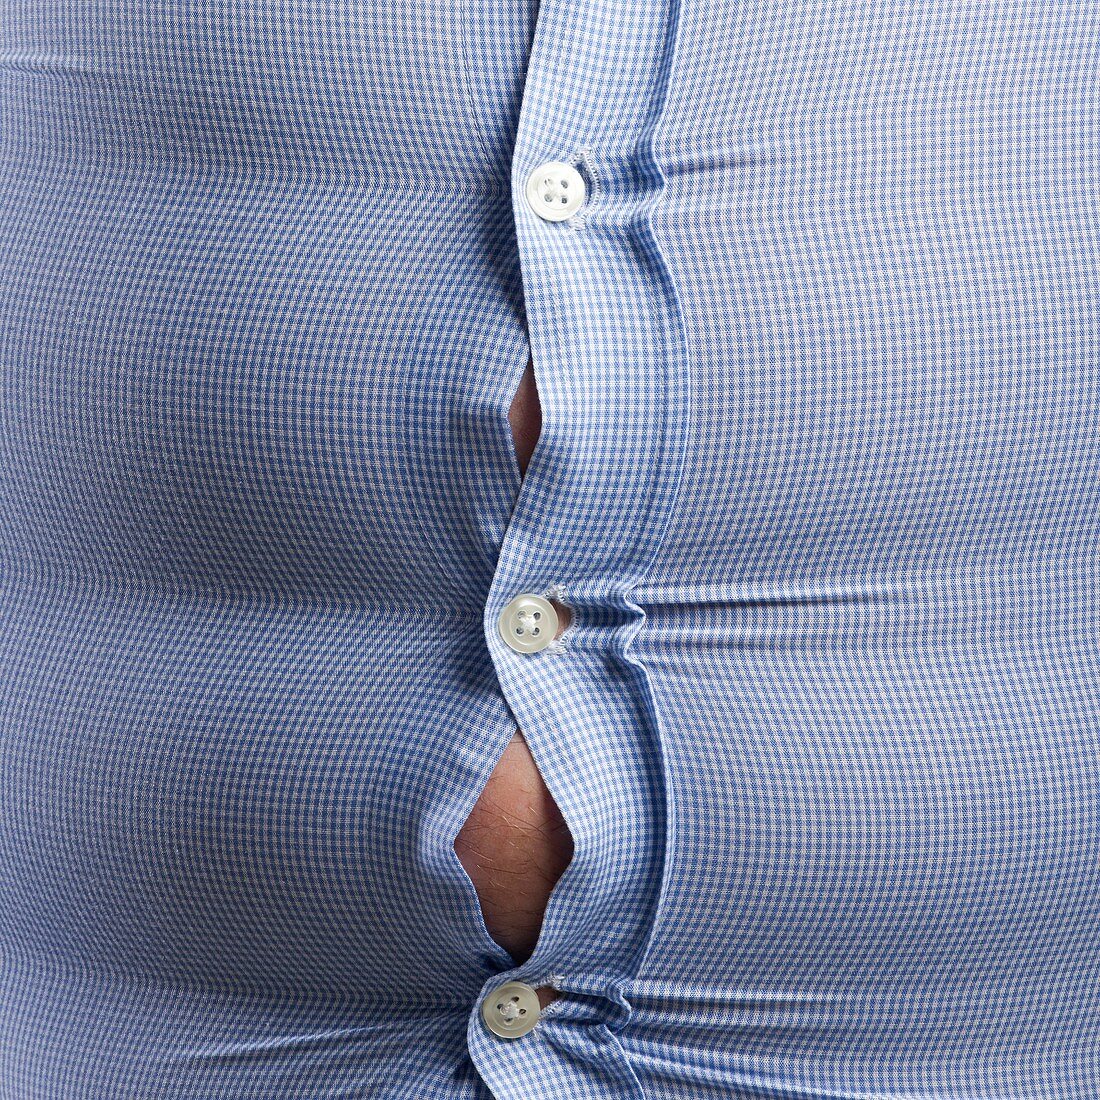 Overweight man with bulging shirt buttons